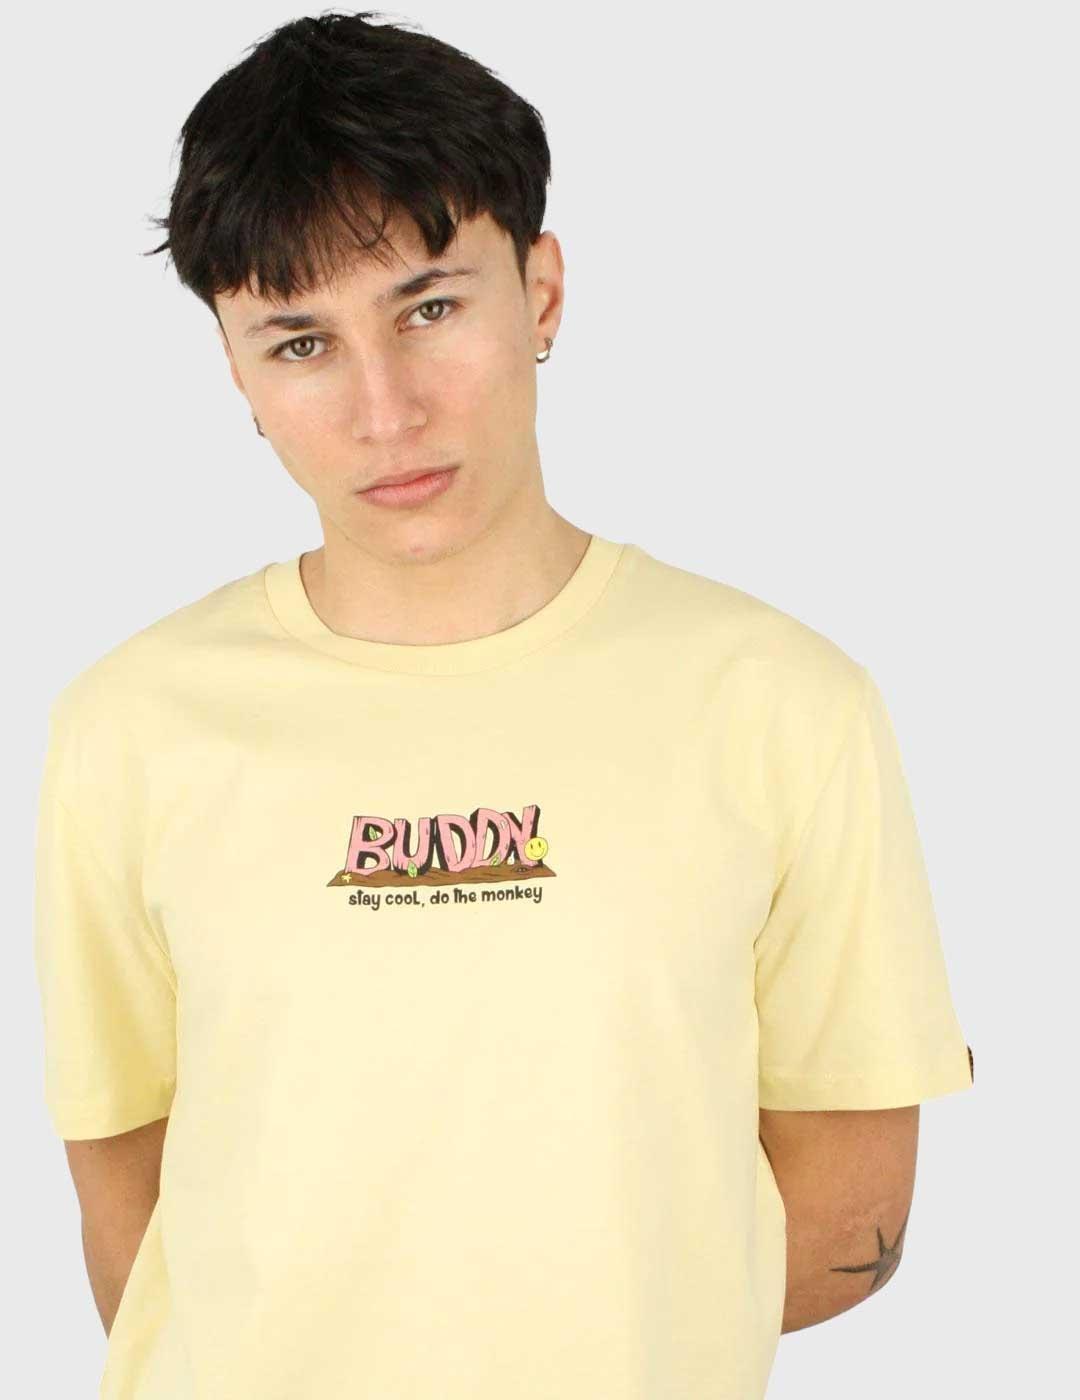 Buddy Monkey Camiseta amarilla para hombre